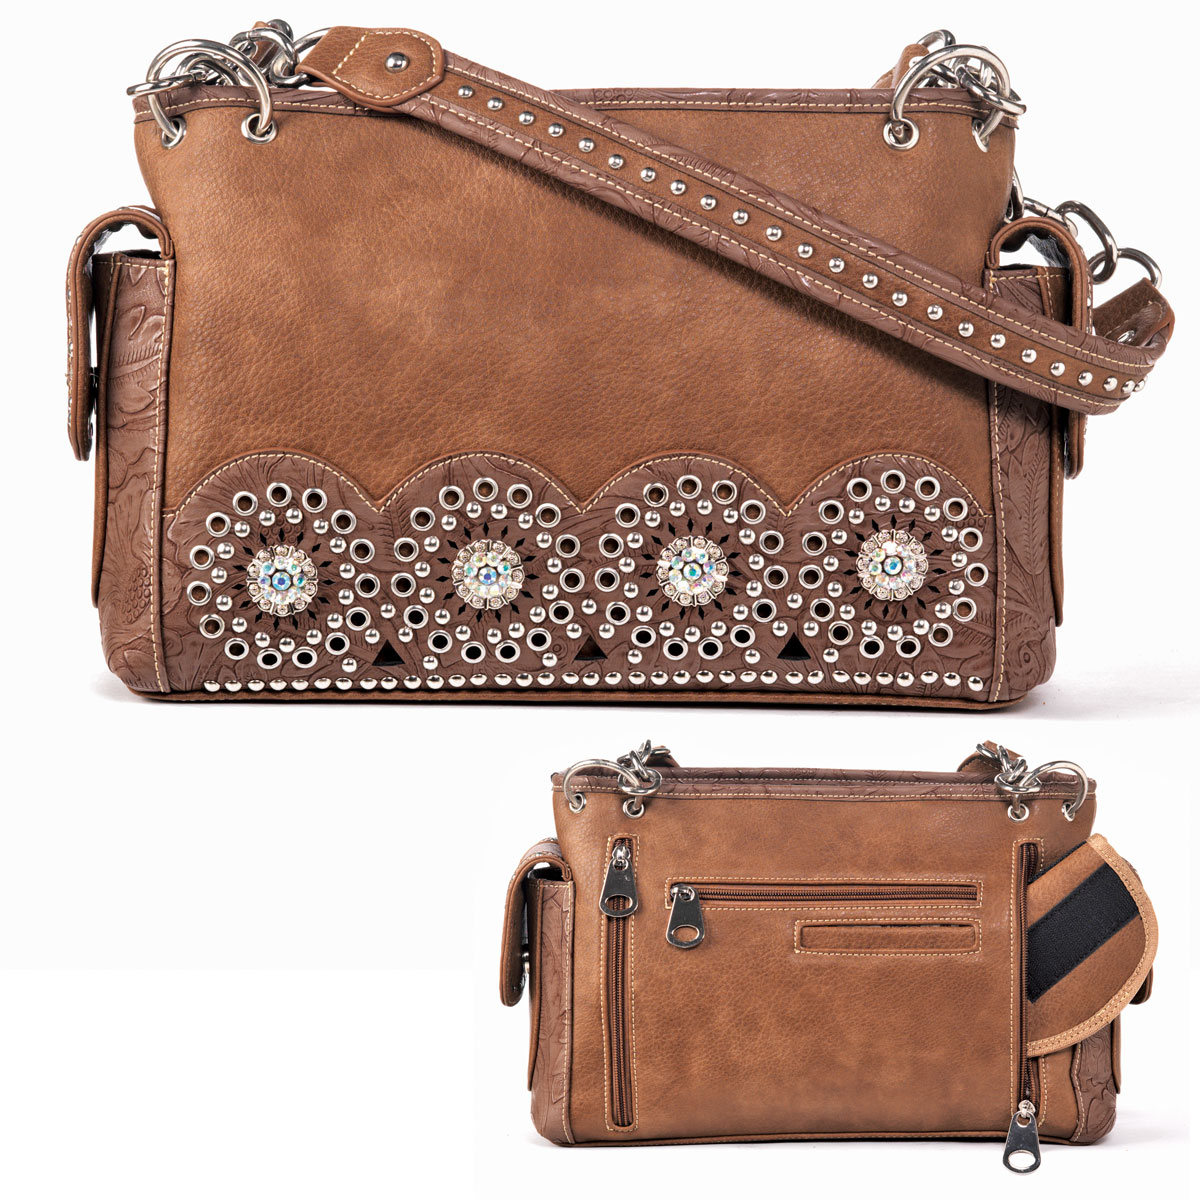 N7541402 Rhianna Style Satchel Bag, Brown - 9 X 13 X 5.50 In.